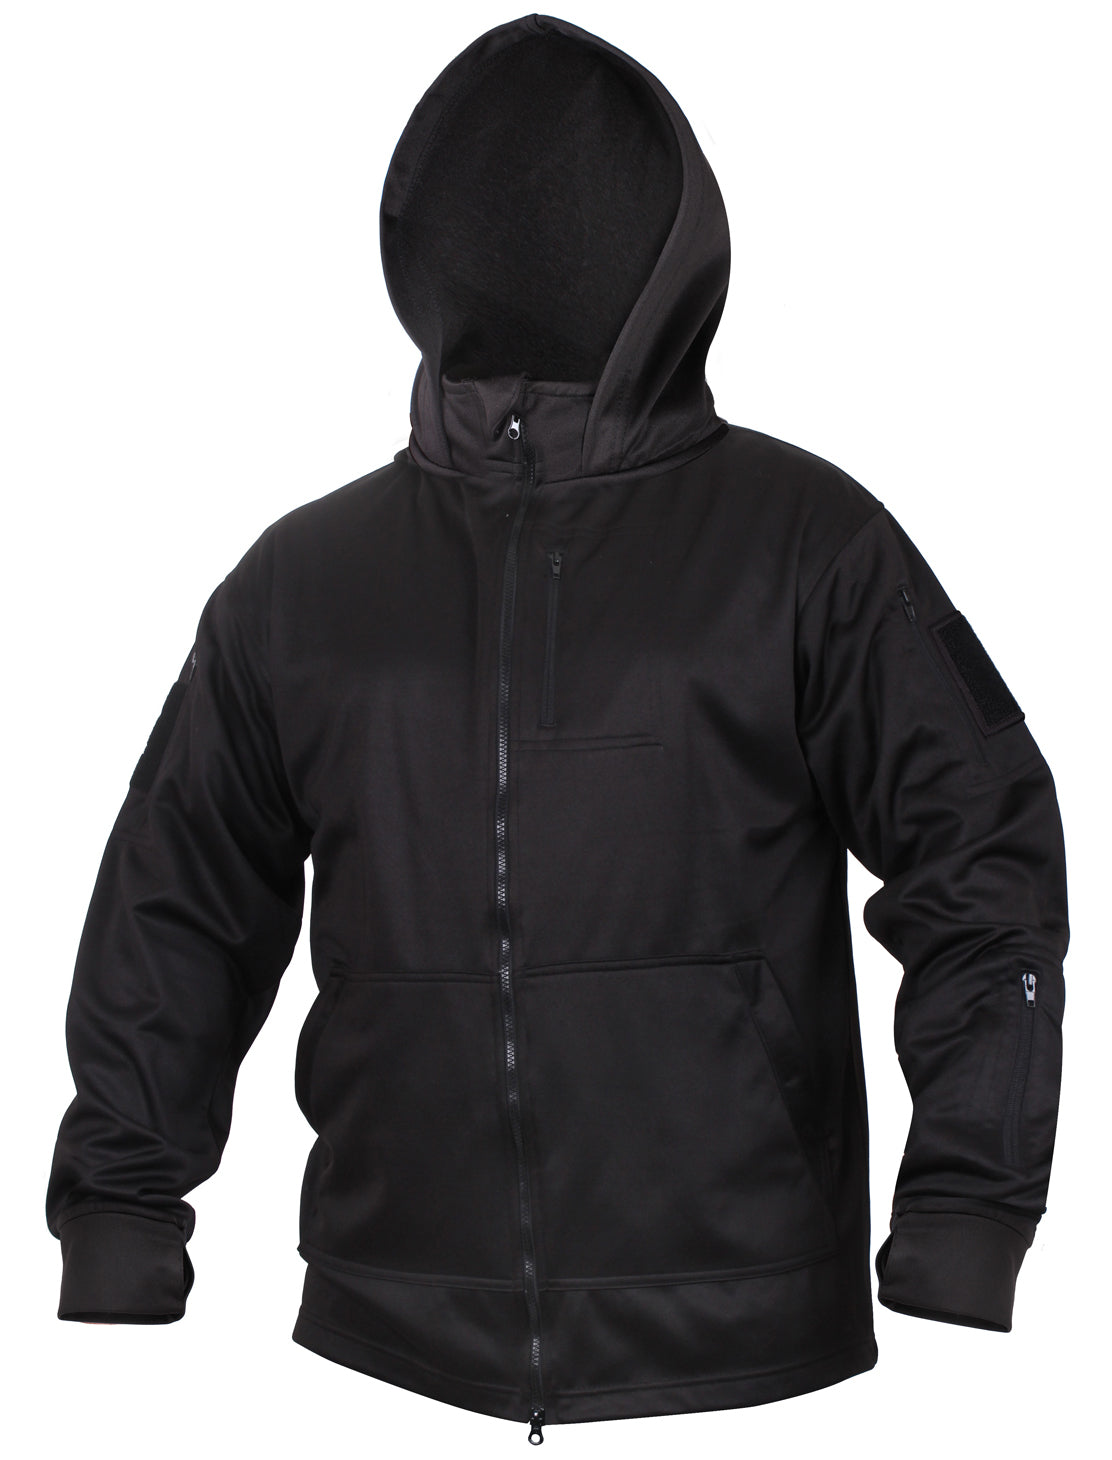 Rothco Men's Tactical Zip Up Hoodie -  Black Zippered Hooded Sweatshirt